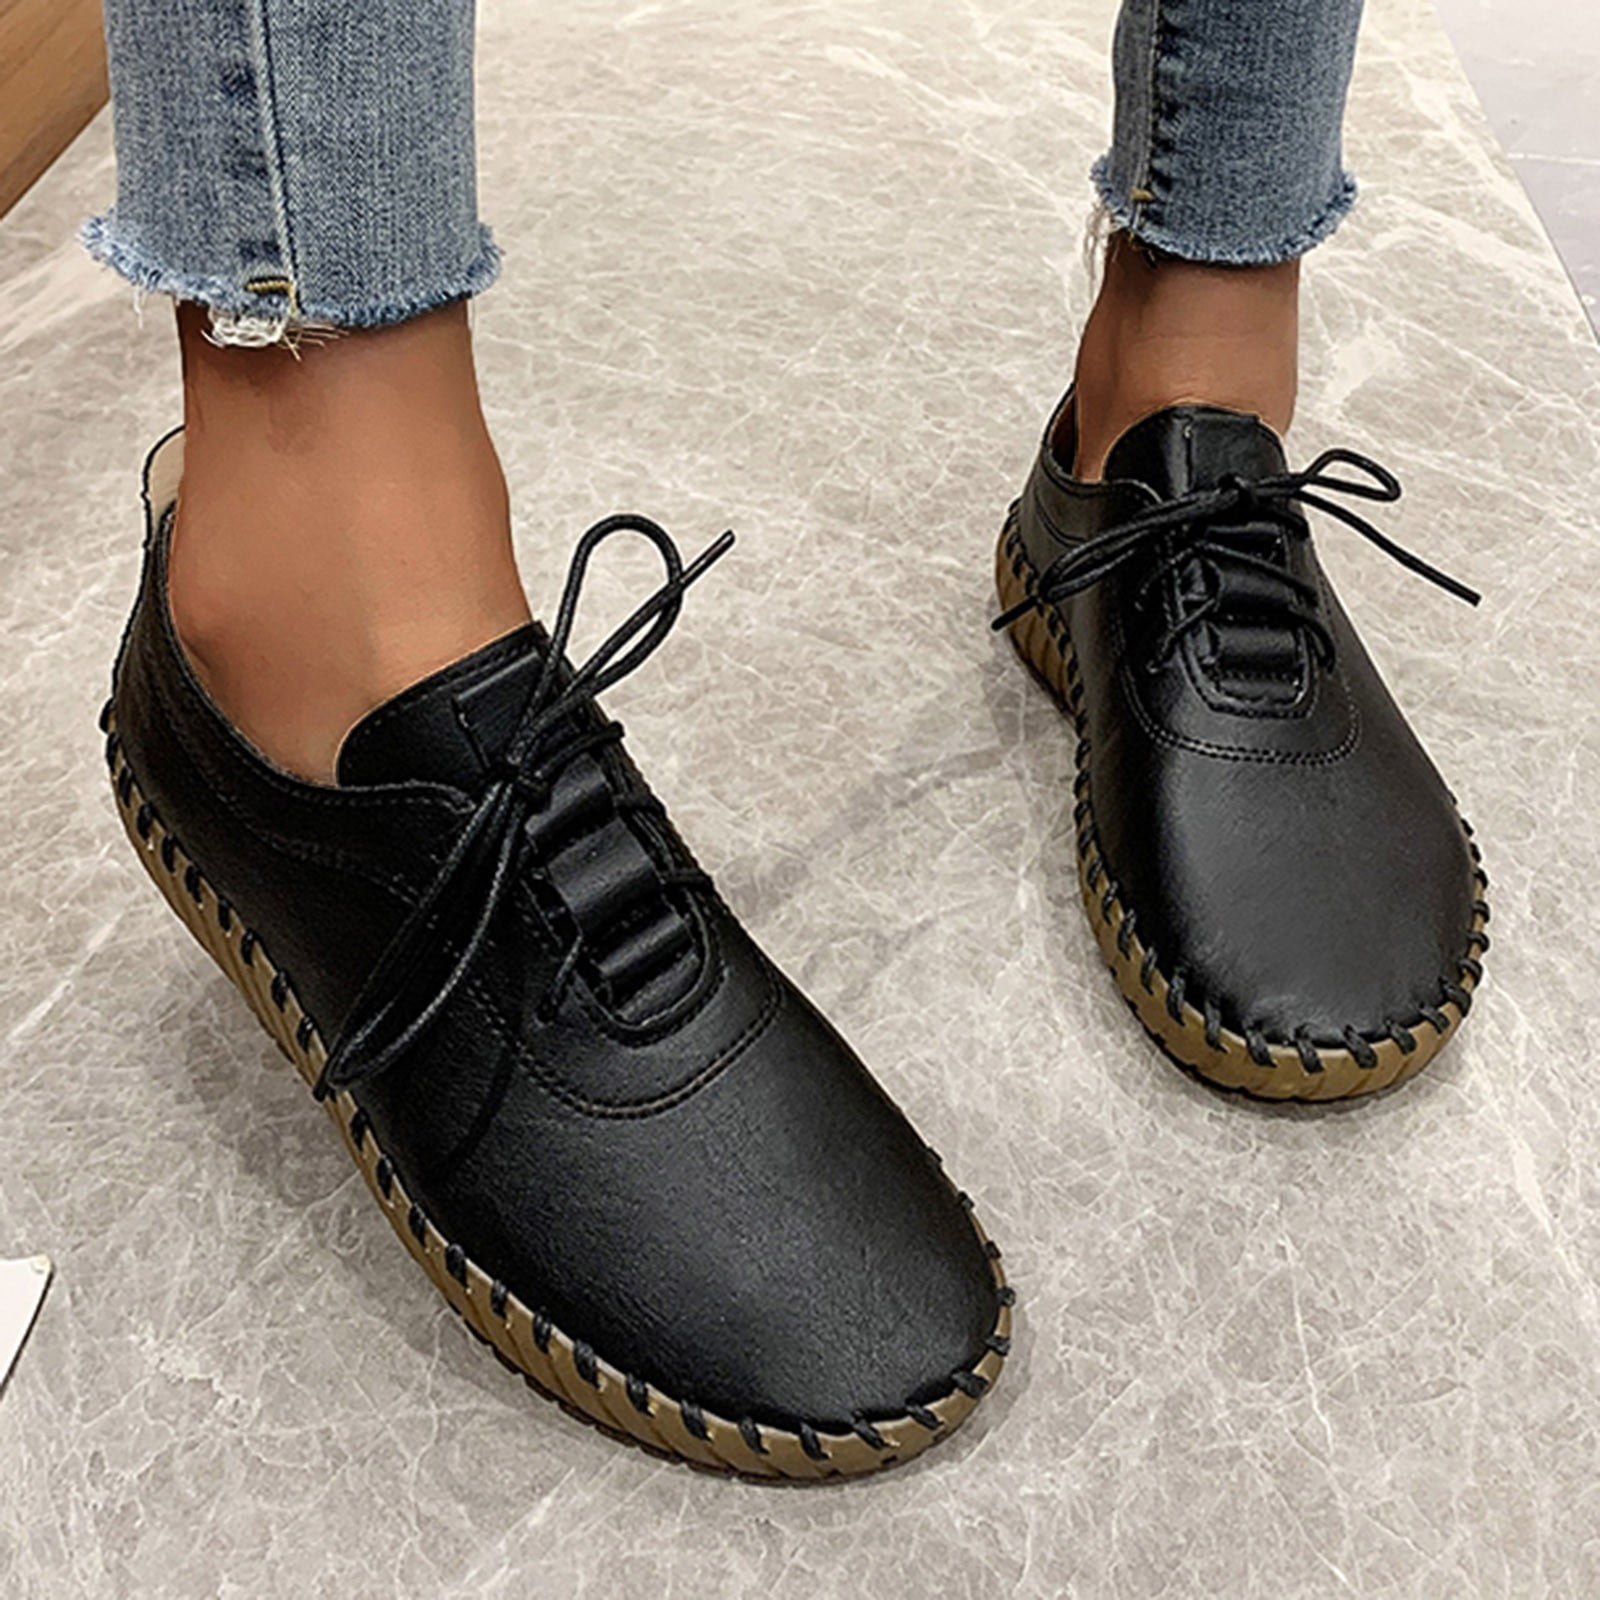 black dress shoes women’s